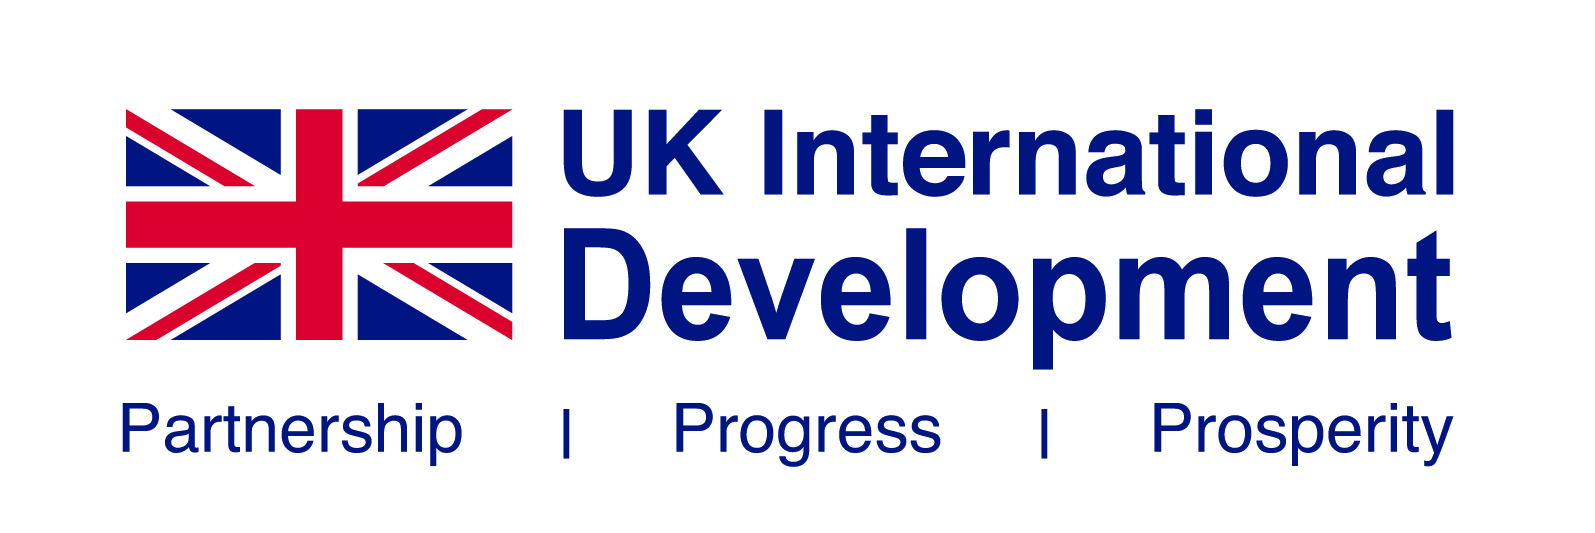  UK International Development logo - Partnership, Progress and Prosperity